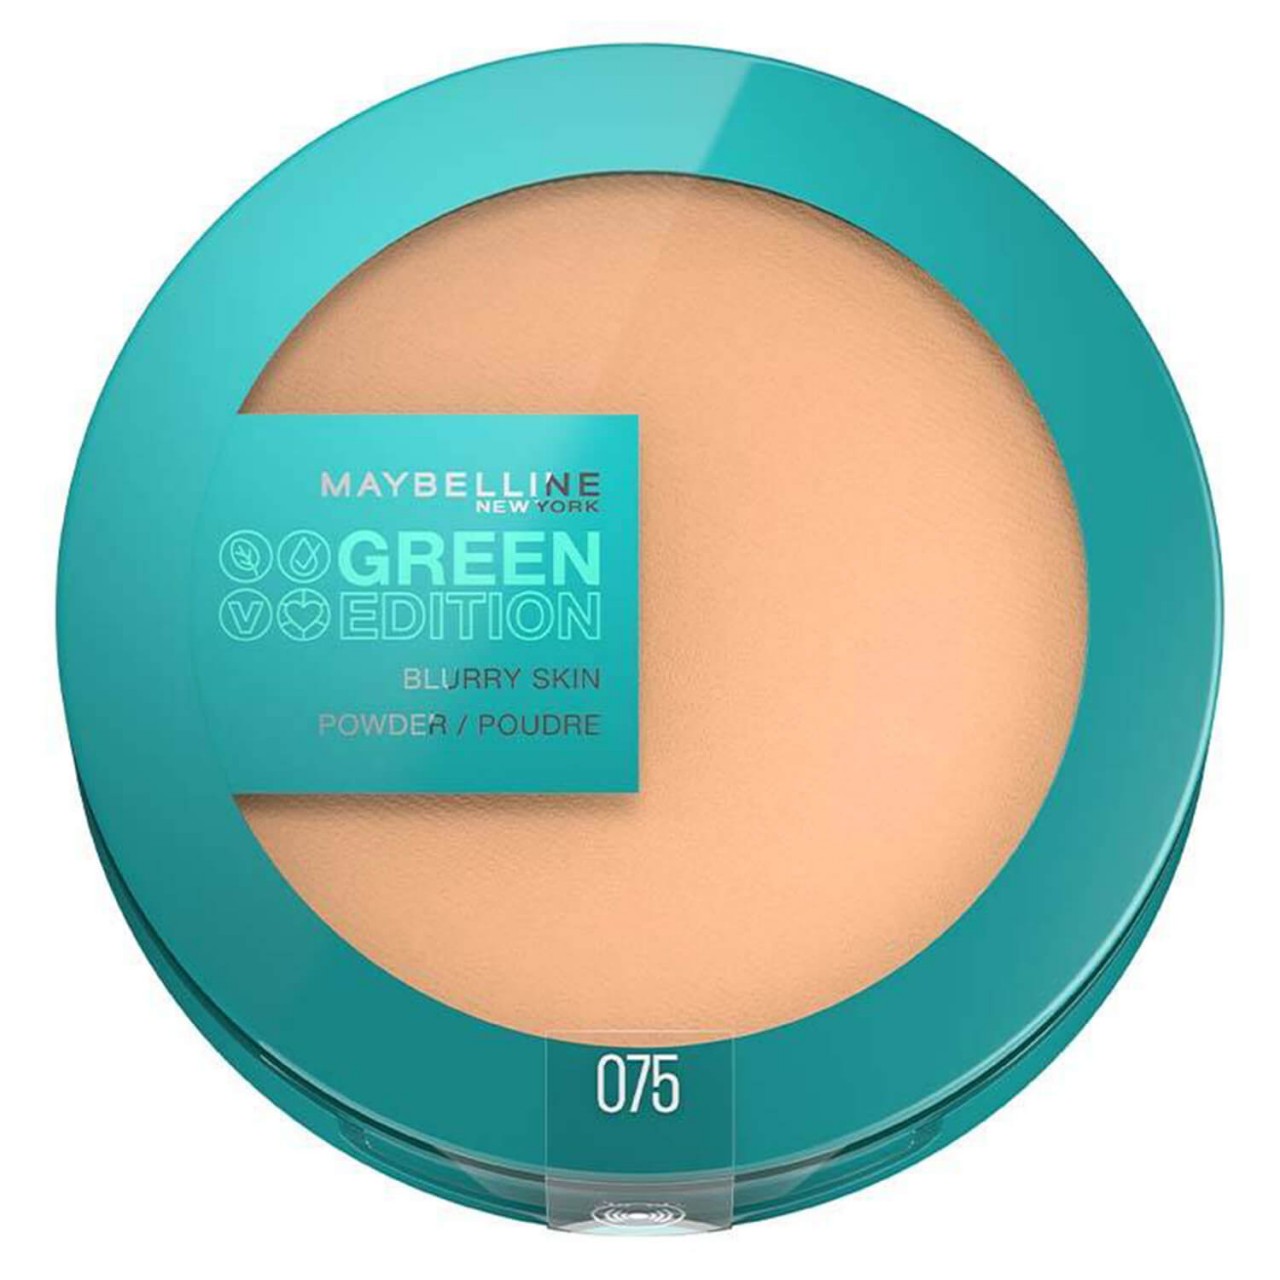 Maybelline NY Teint - Green Edition Blurry Skin Powder 075 von Maybelline New York